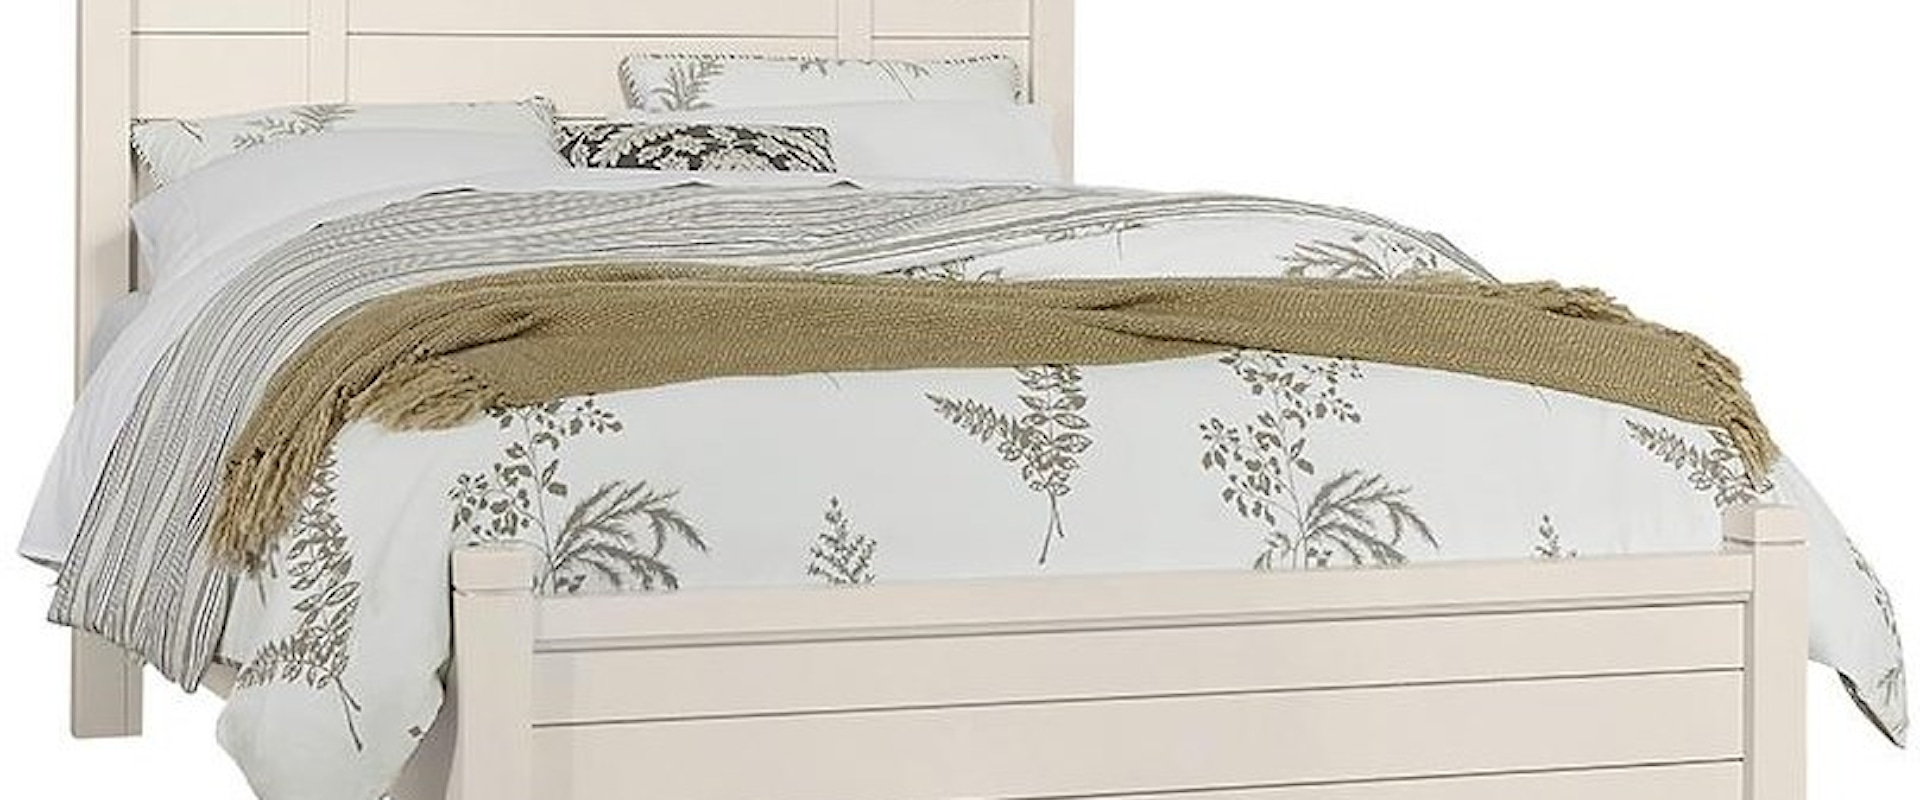 Queen Arch Bed Set